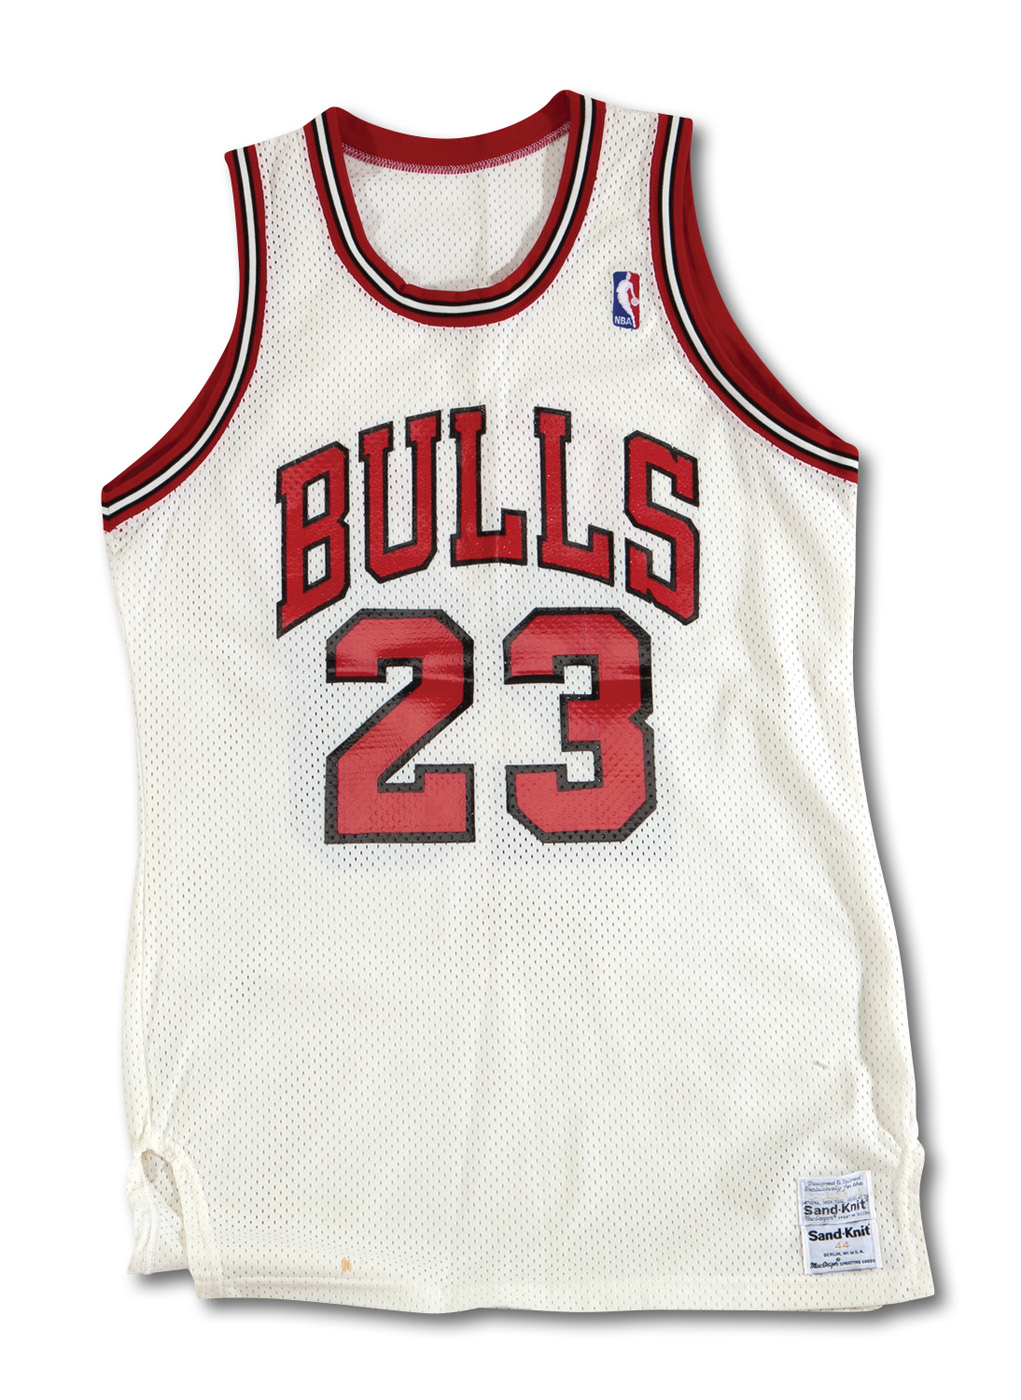 1986-87 – Chicago Bulls History